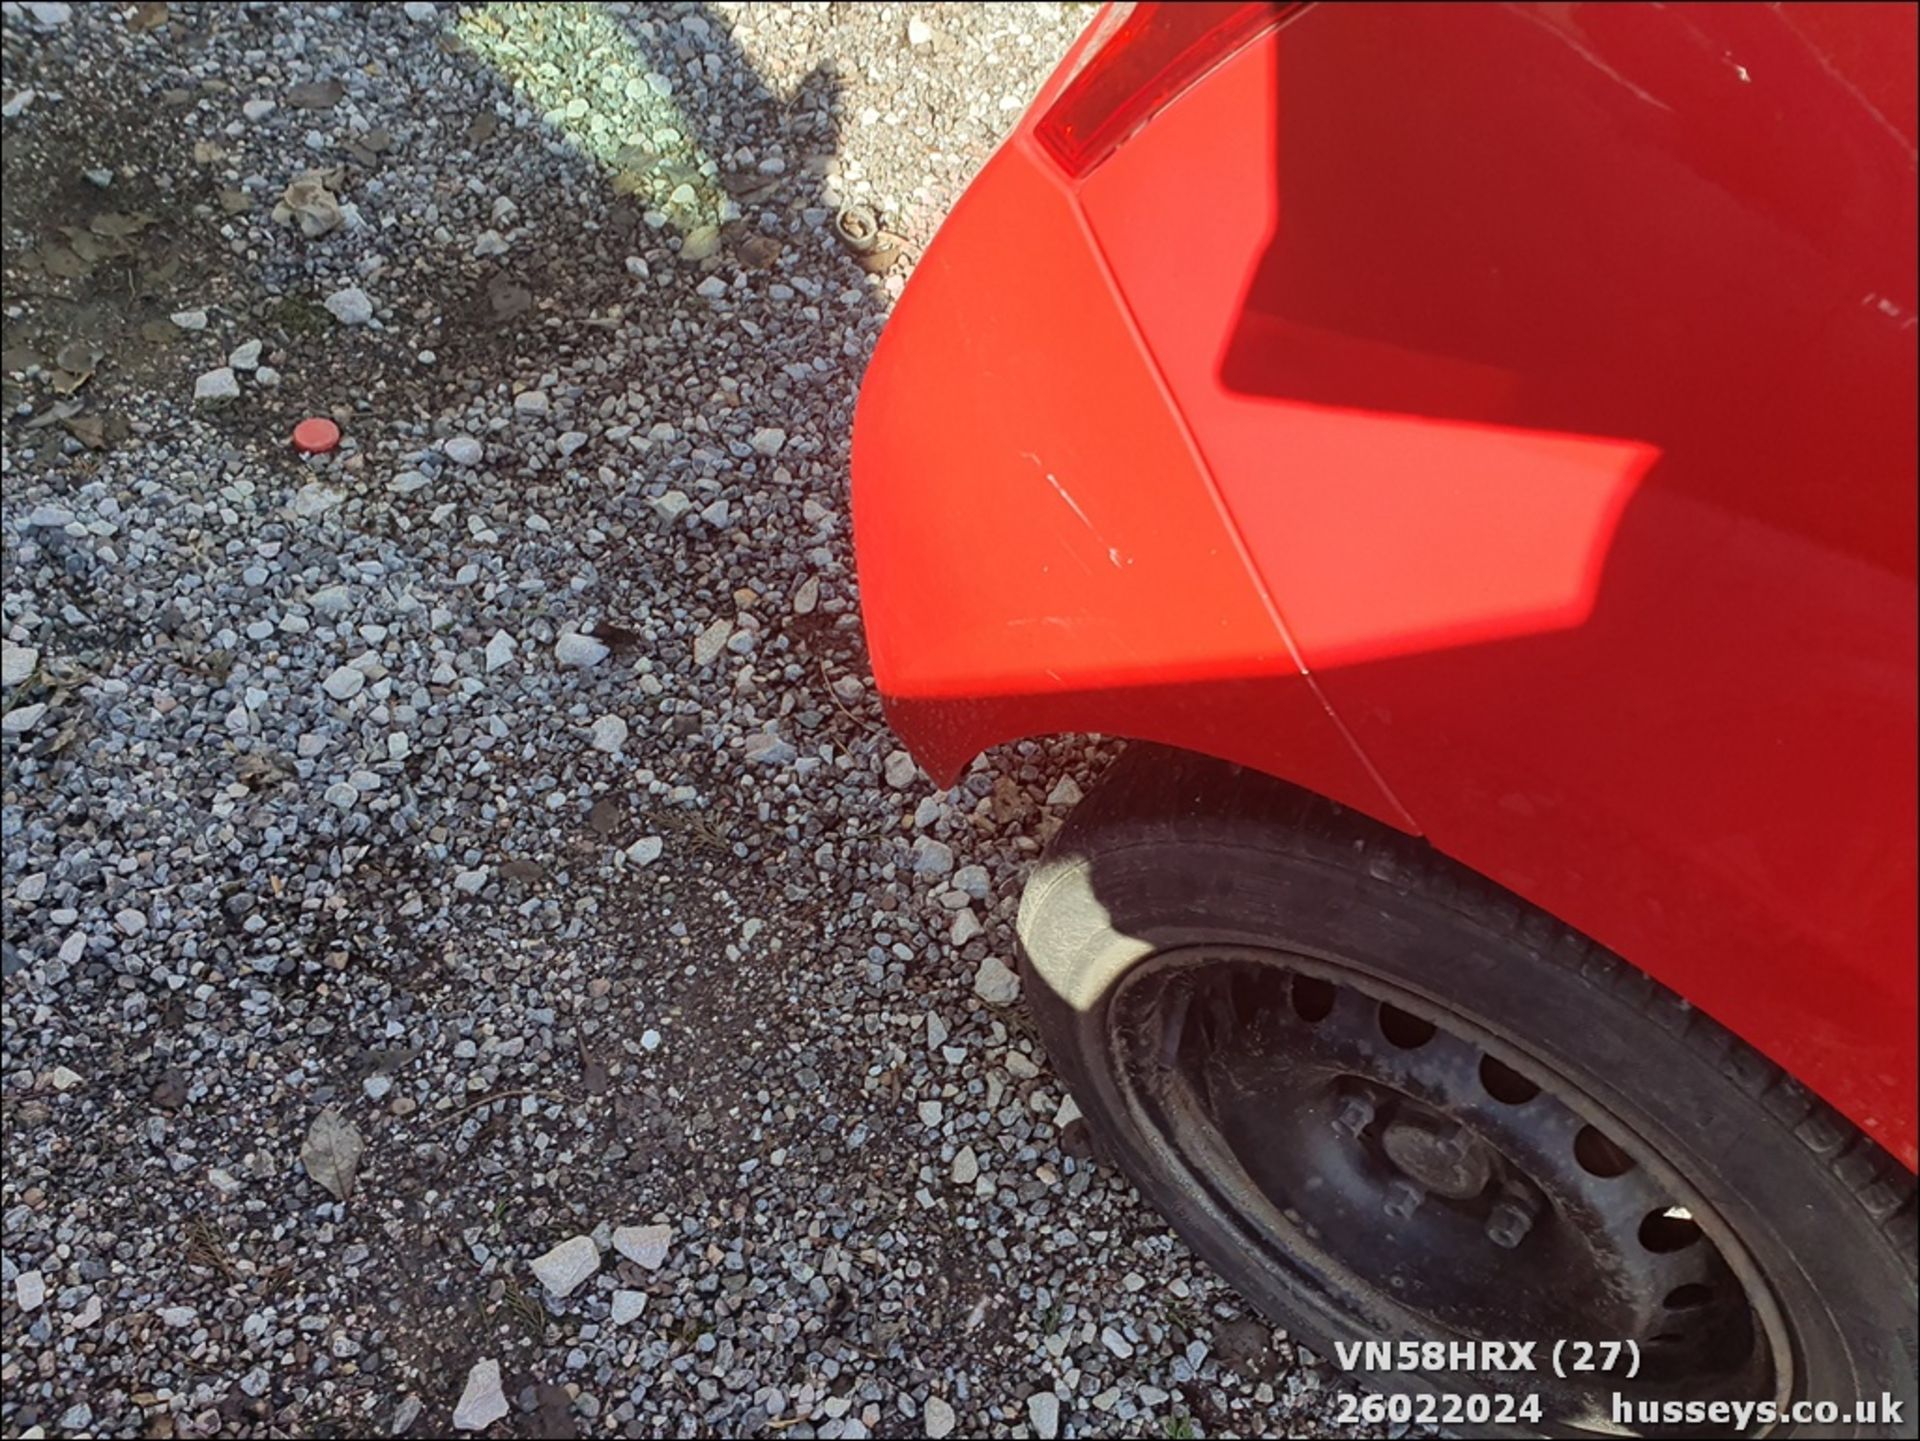 08/58 RENAULT TWINGO EXTREME 60 - 1149cc 3dr Hatchback (Red, 101k) - Image 28 of 34